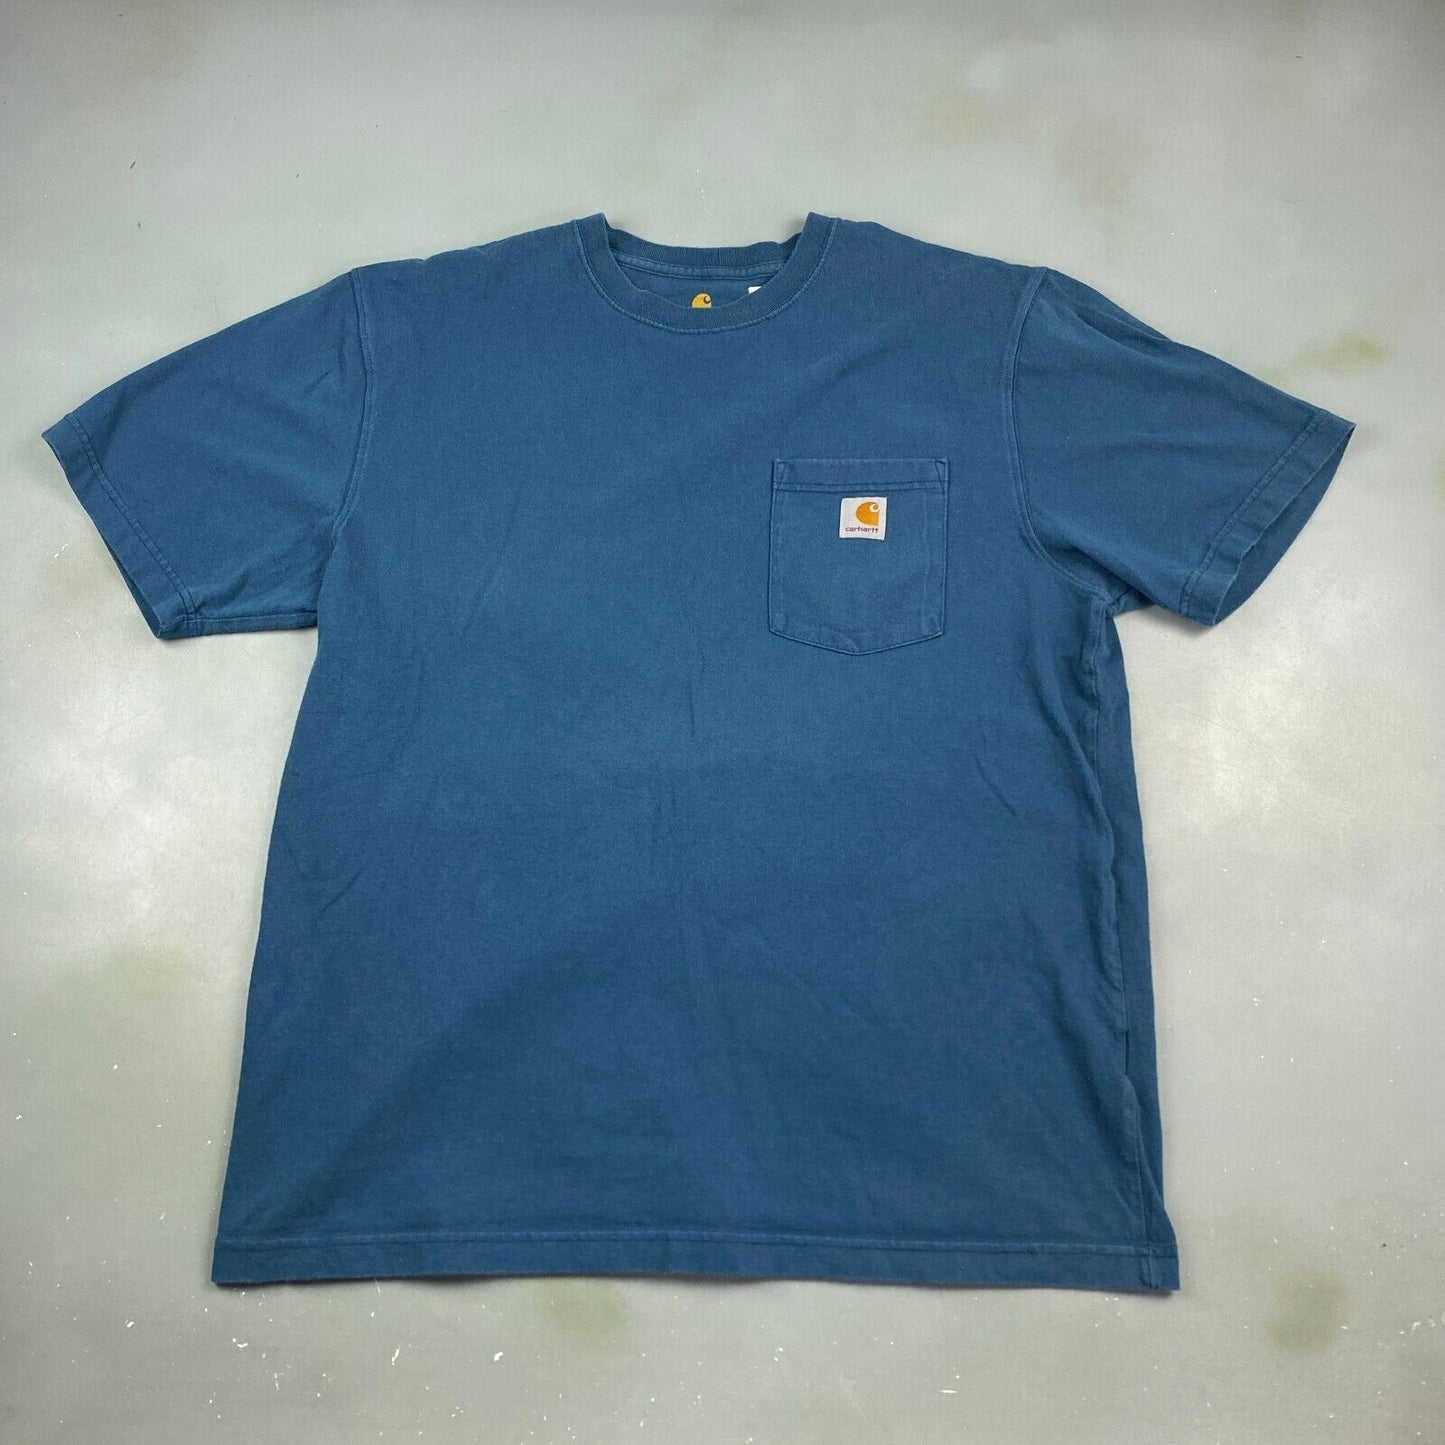 Carhartt Sm logo Blue Pocket T-Shirt Original Fit sz Large Men